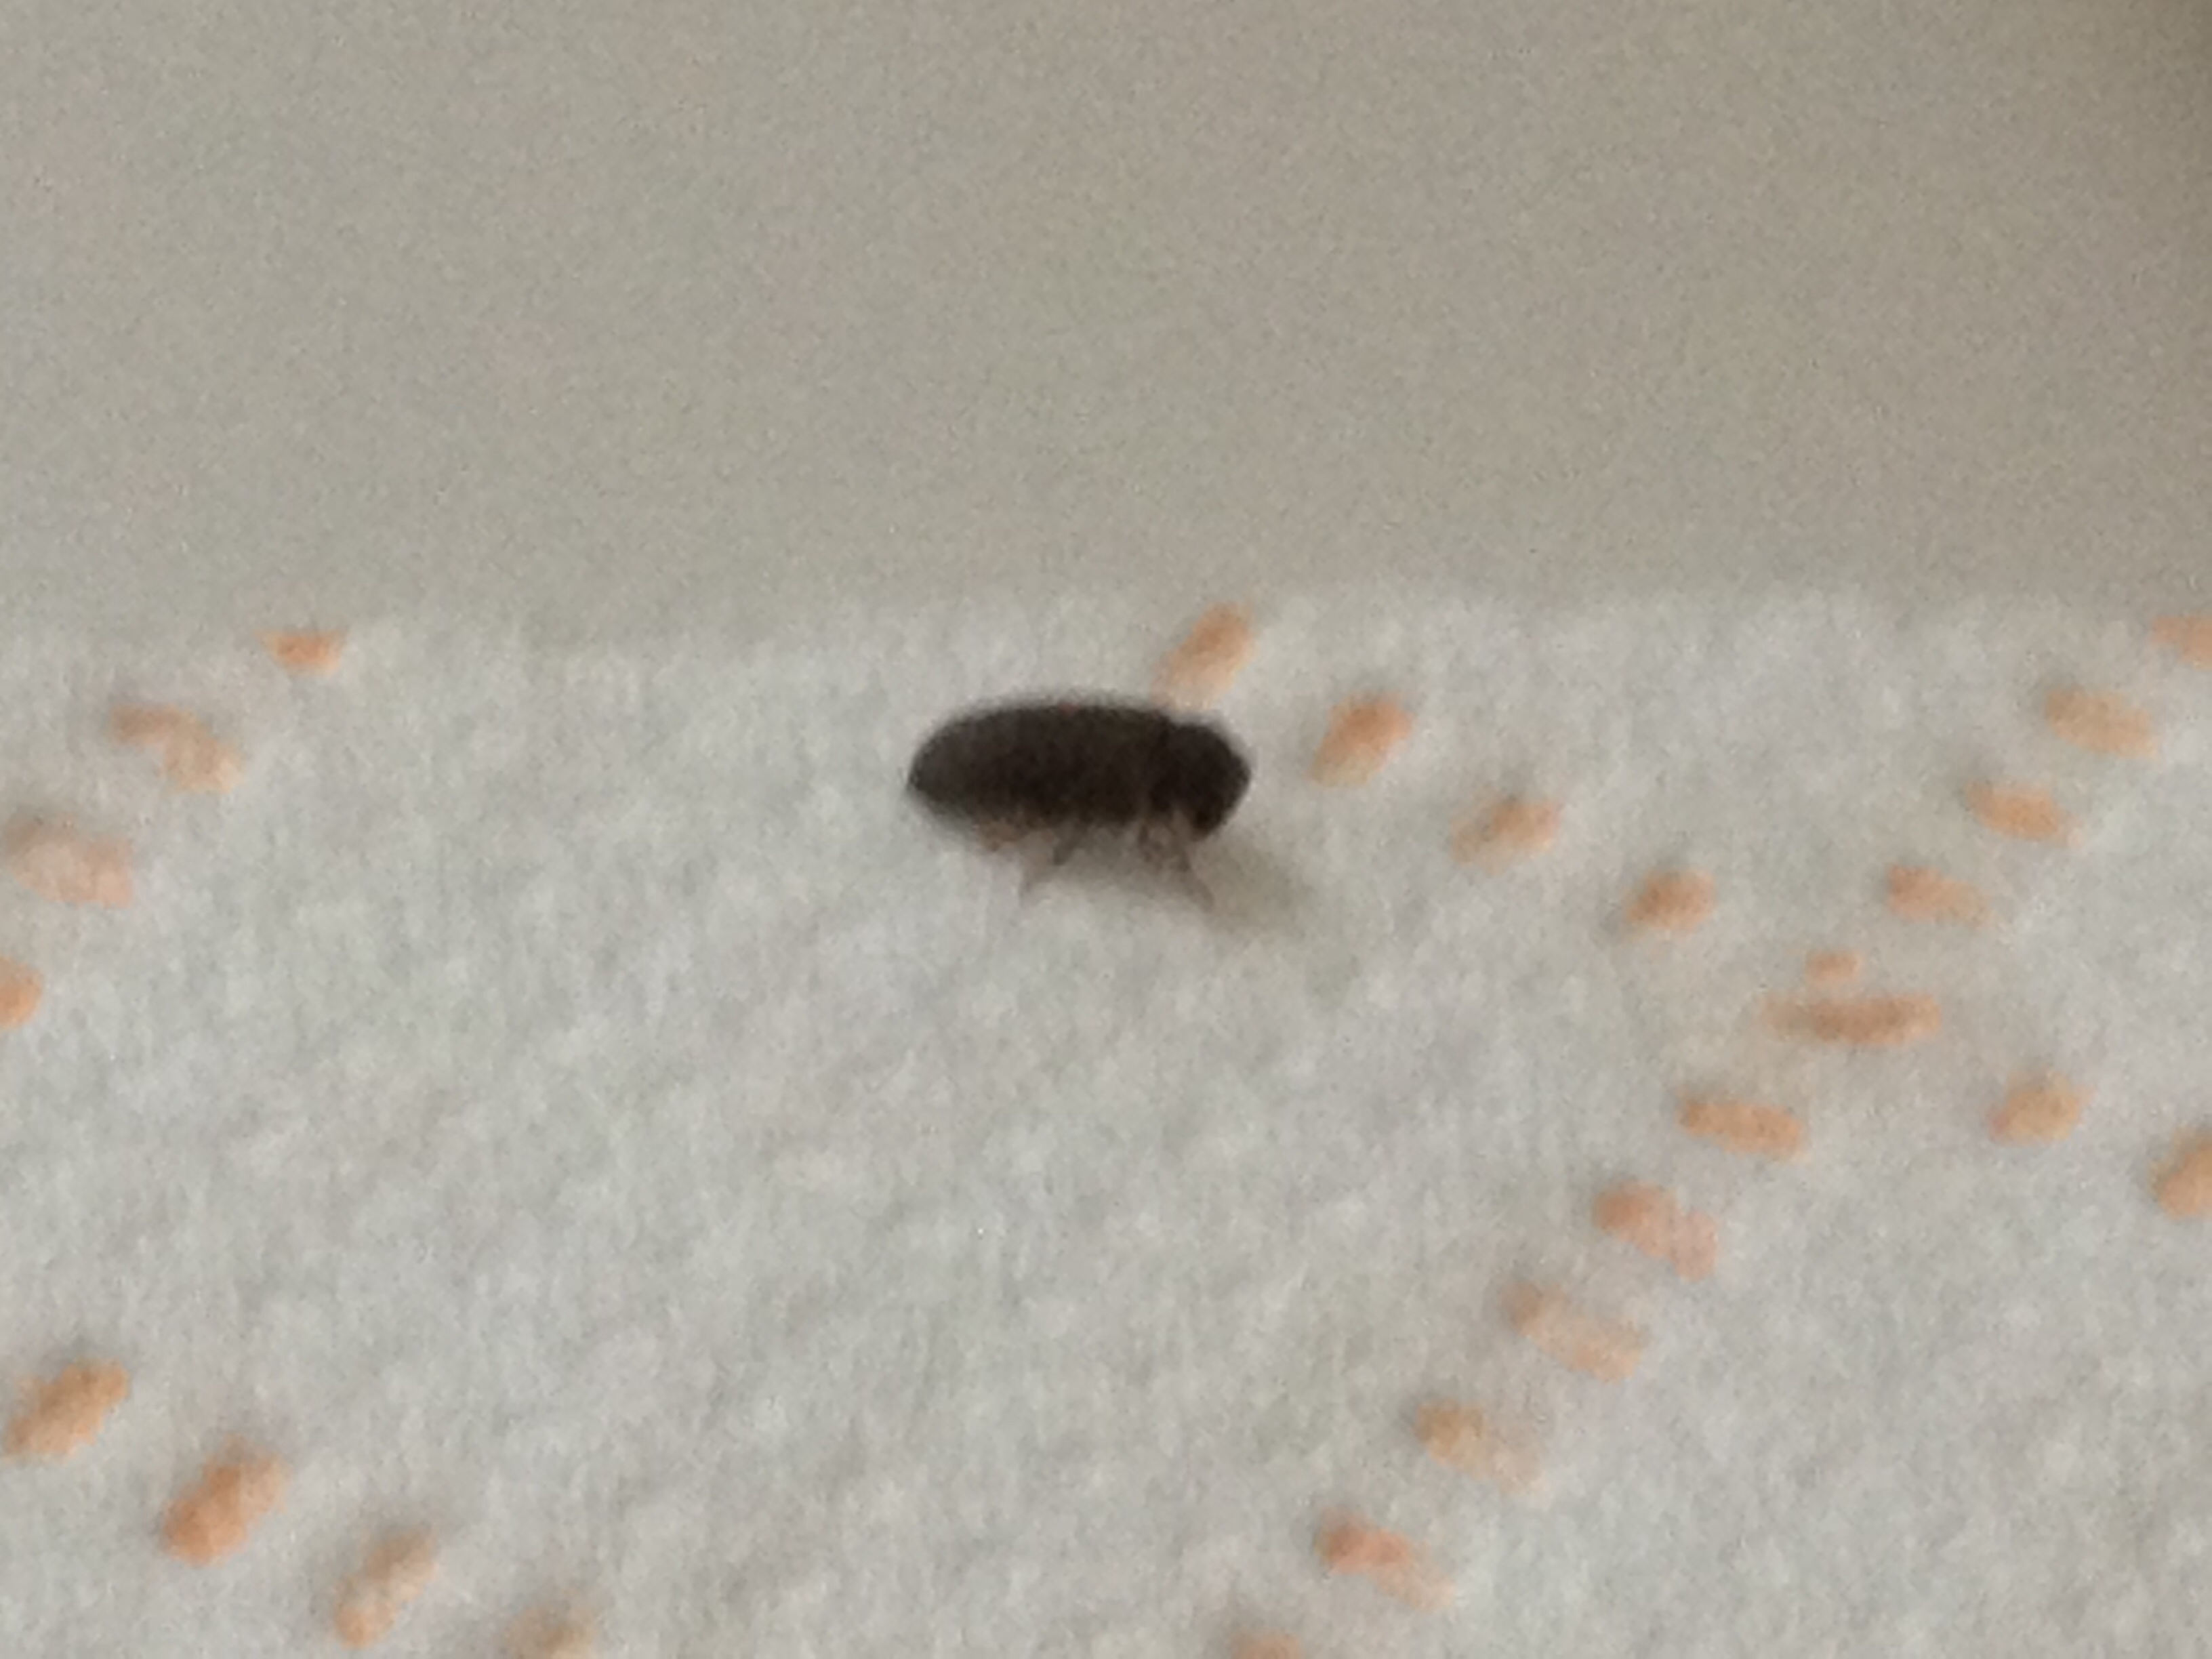 Natureplus Please Help Me Identify Tiny Black Bugs Found In